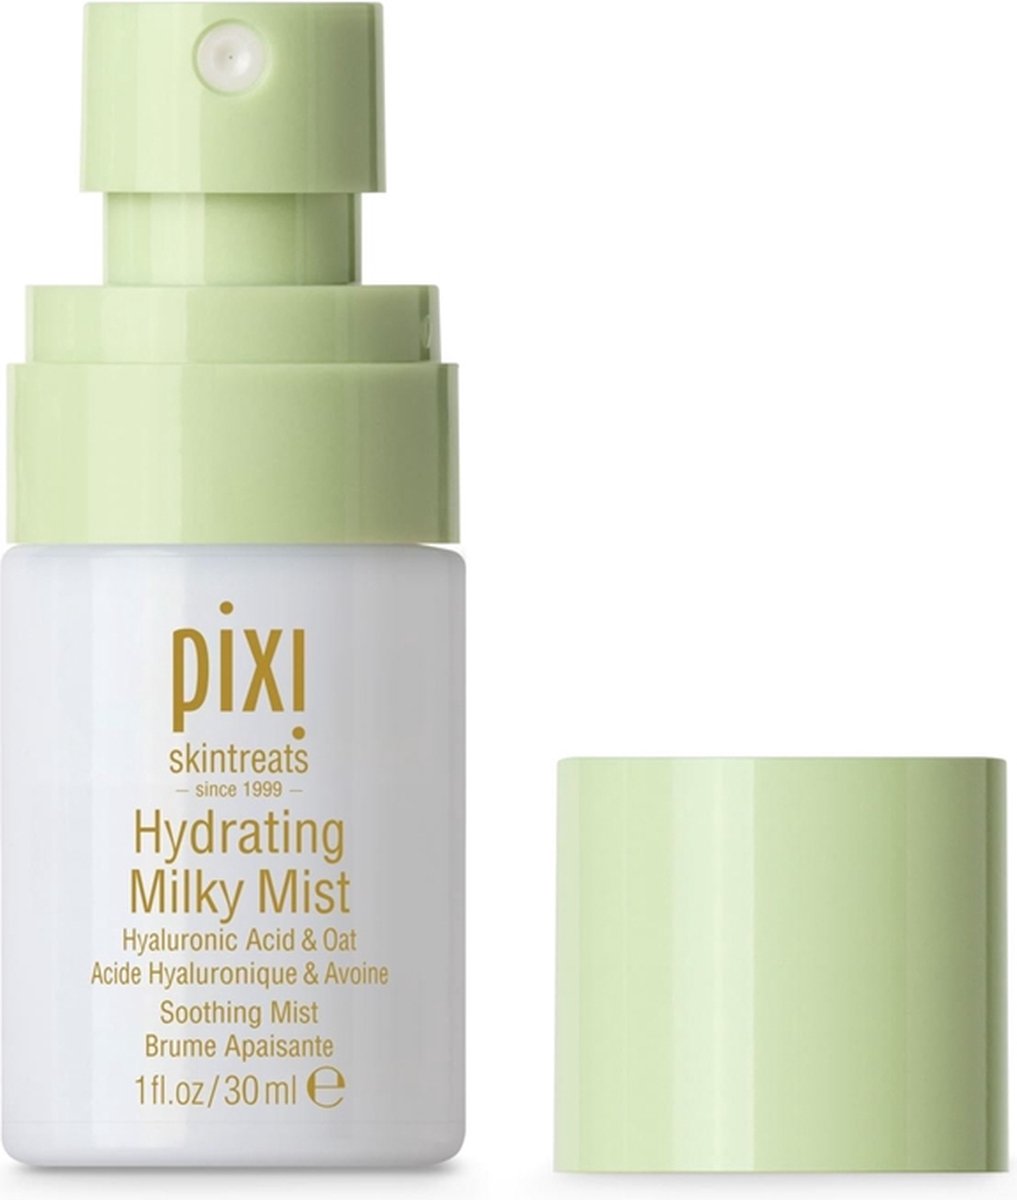 Pixi - Hydrating Milky Mist - 30 ml